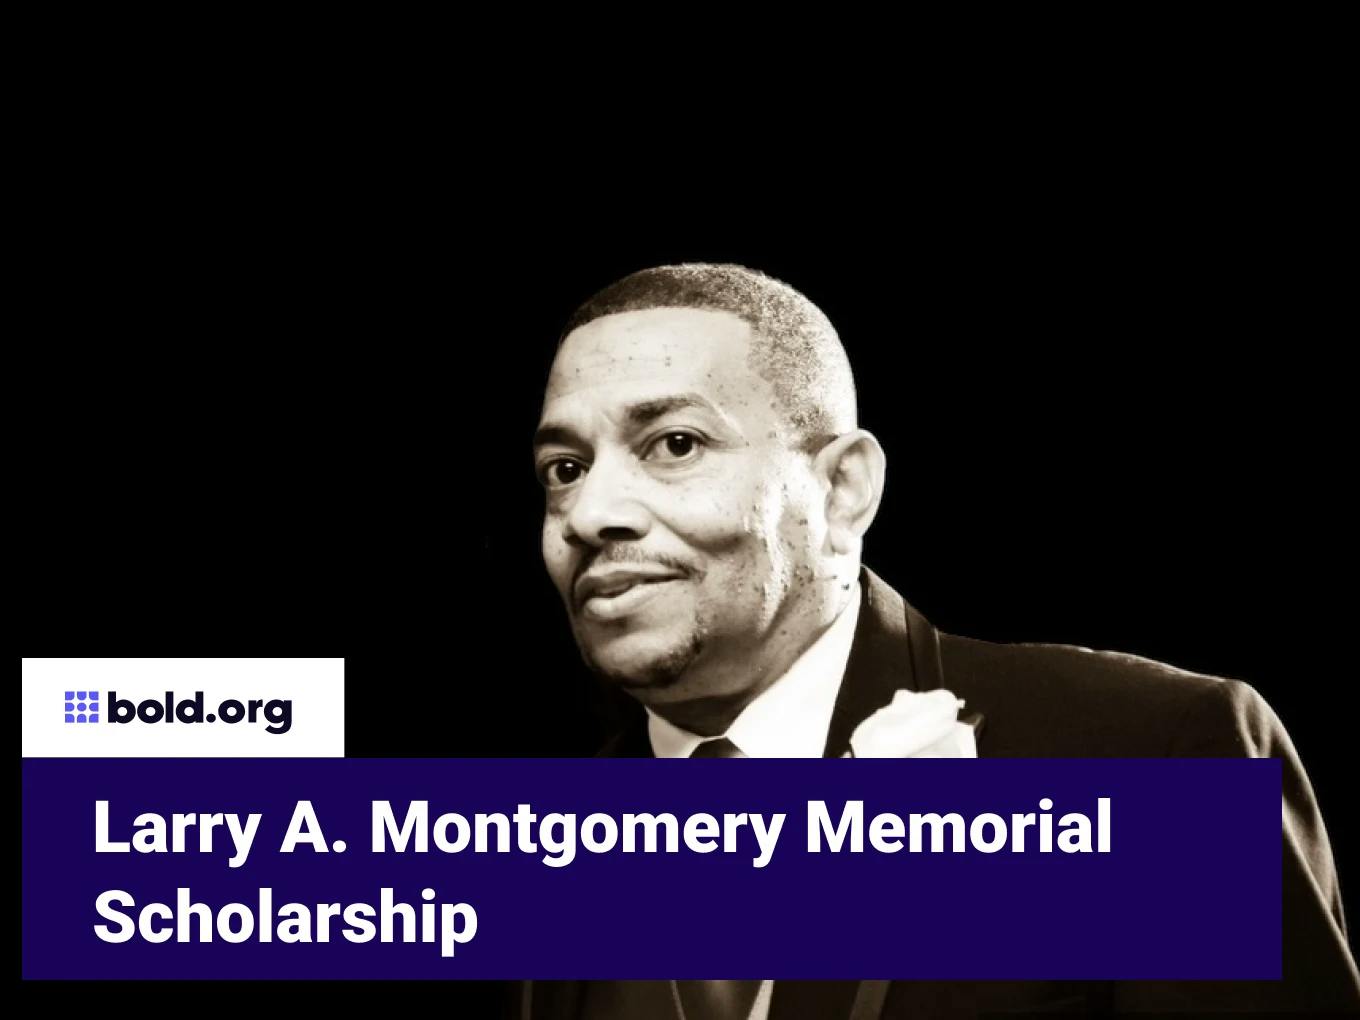 Larry A. Montgomery Memorial Scholarship